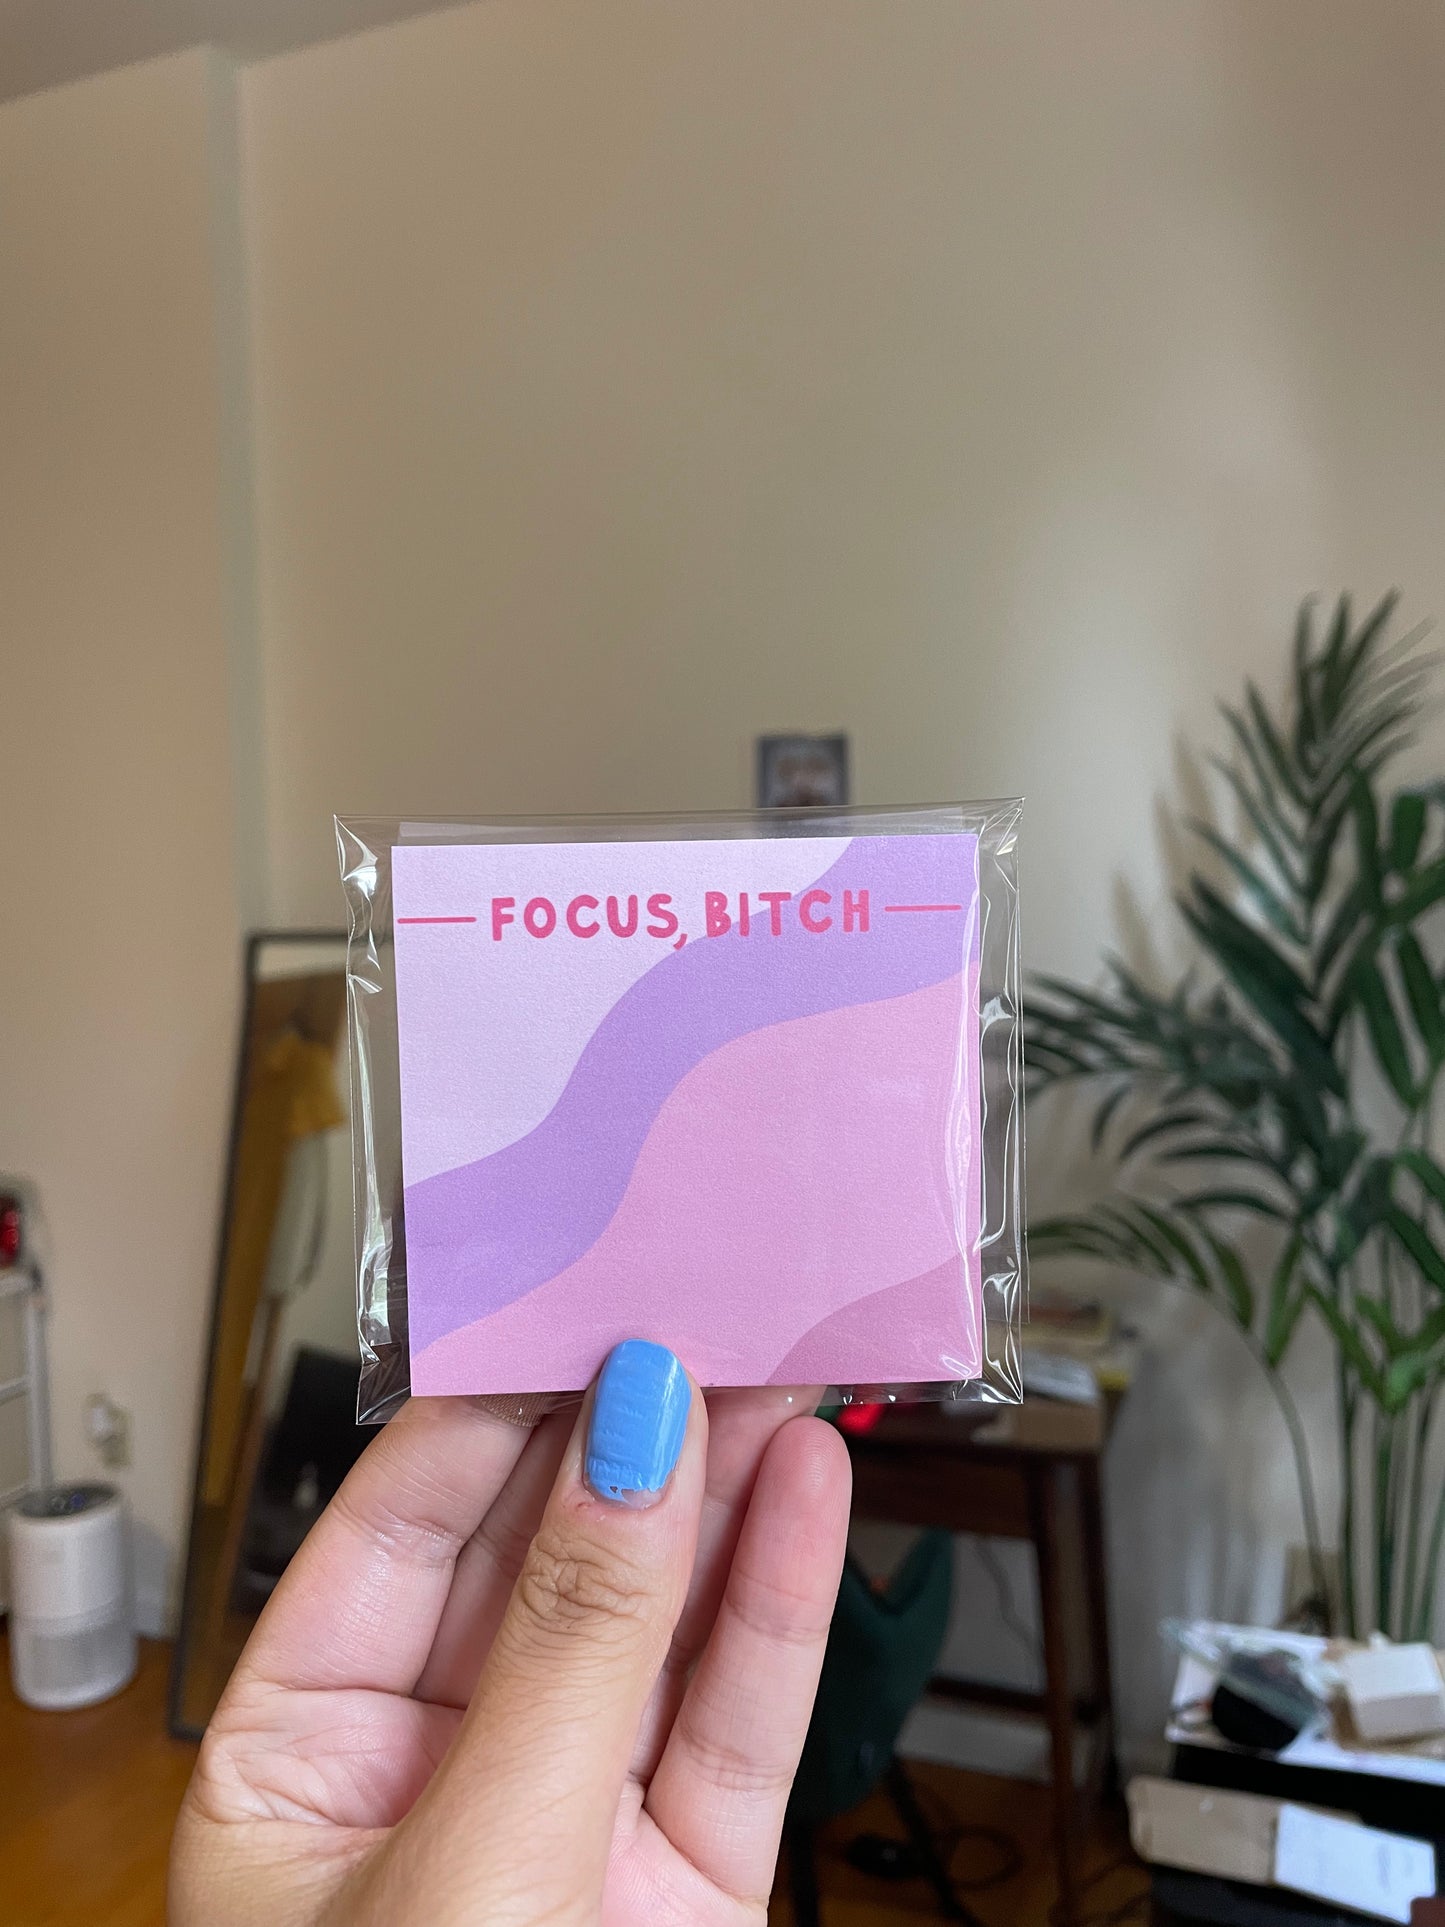 Focus, Bitch - Sticky Notes